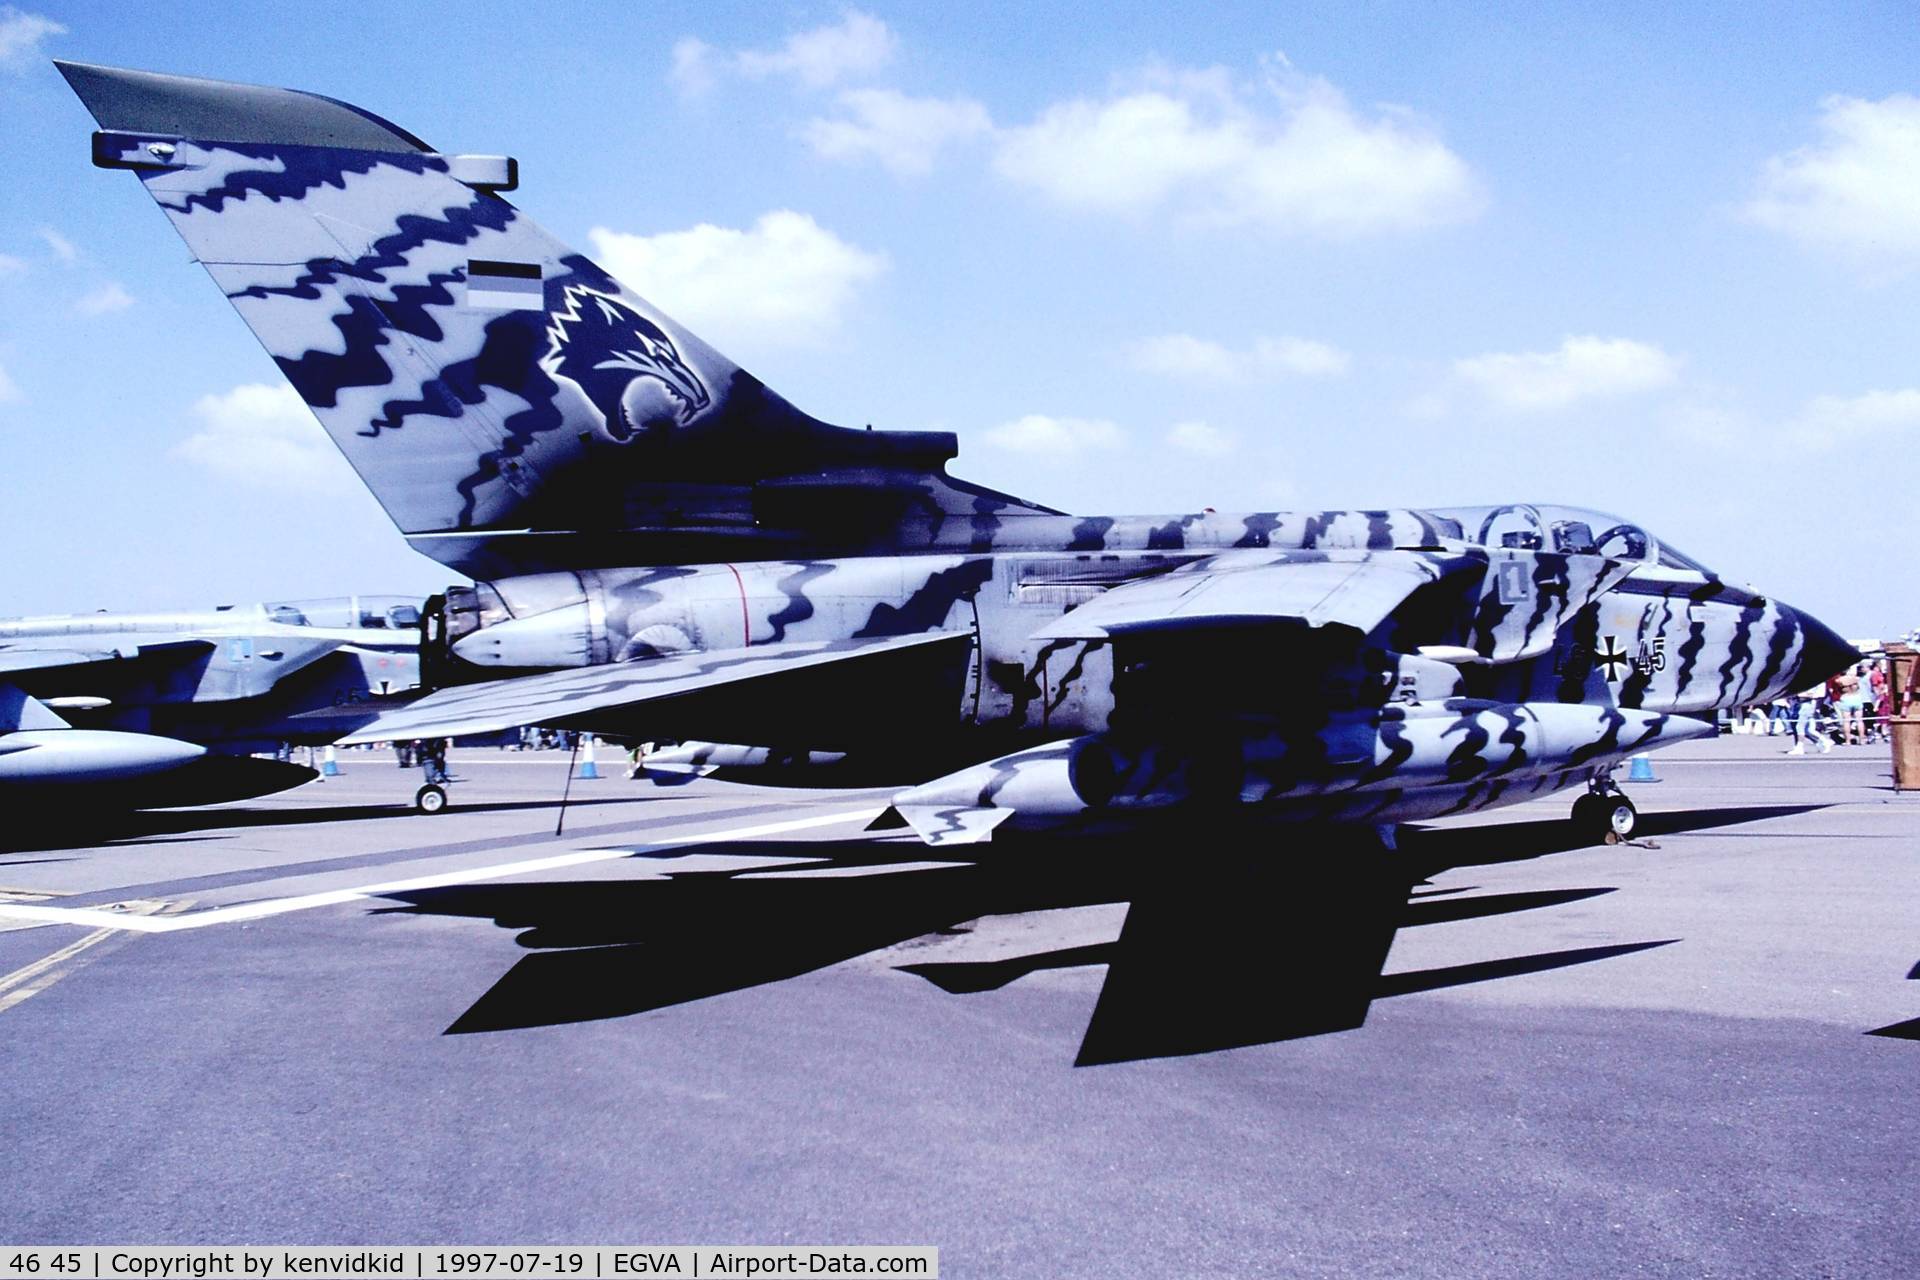 46 45, Panavia Tornado ECR C/N 873/GS278/4345, At the 1997 Royal International Air Tattoo.